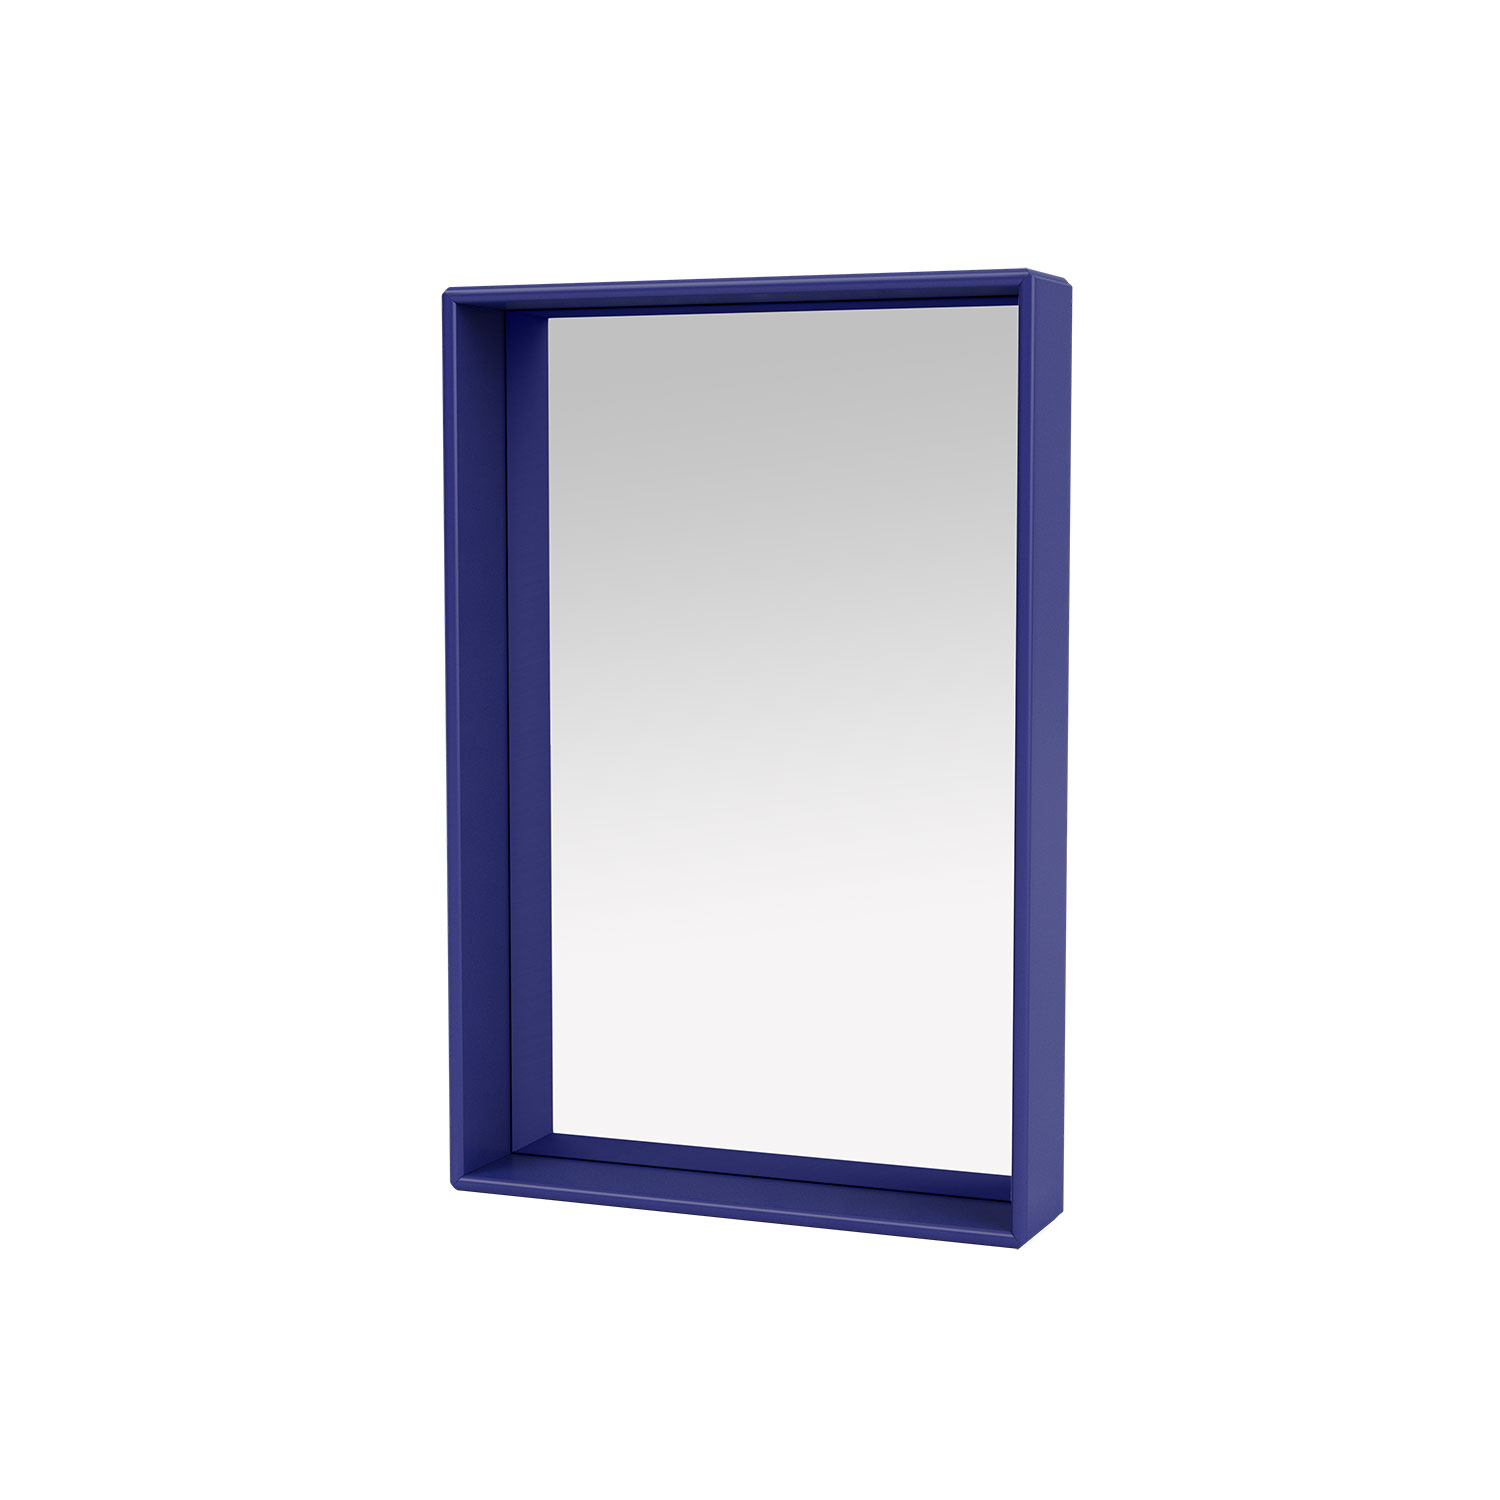 SHELFIE mirror with shelf, 10colors